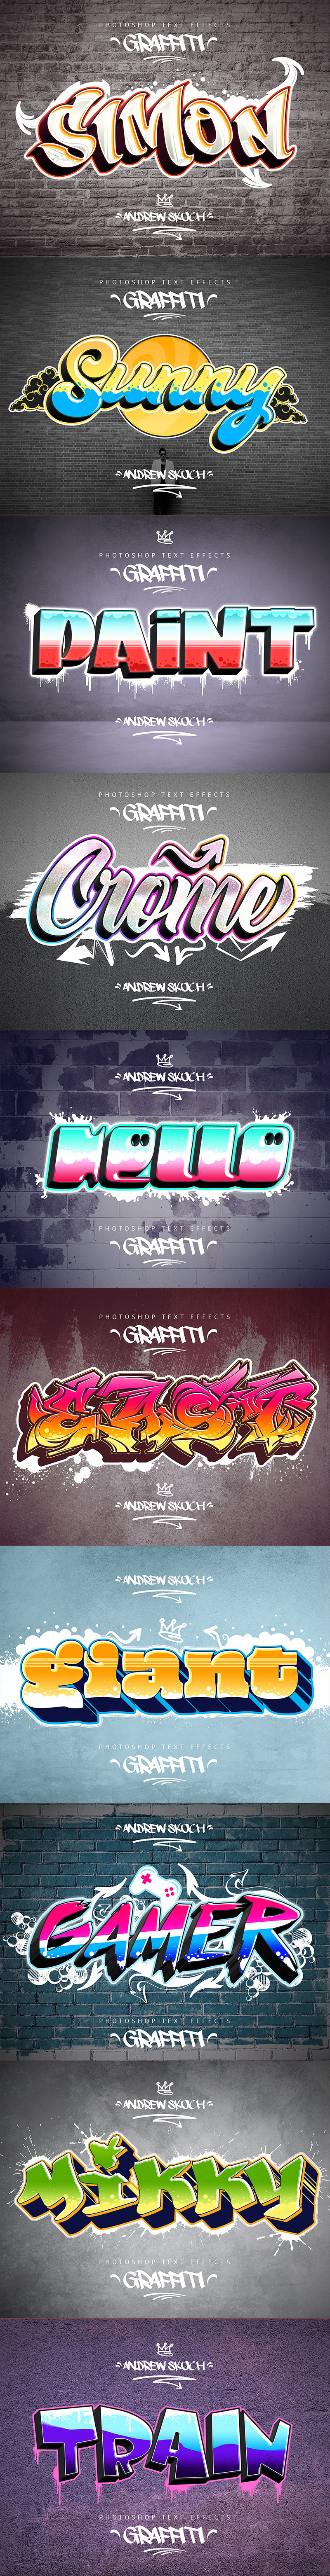 Graffiti Text Effects - 10 PSD - vol 1 por Sko4 / GraphiRiver